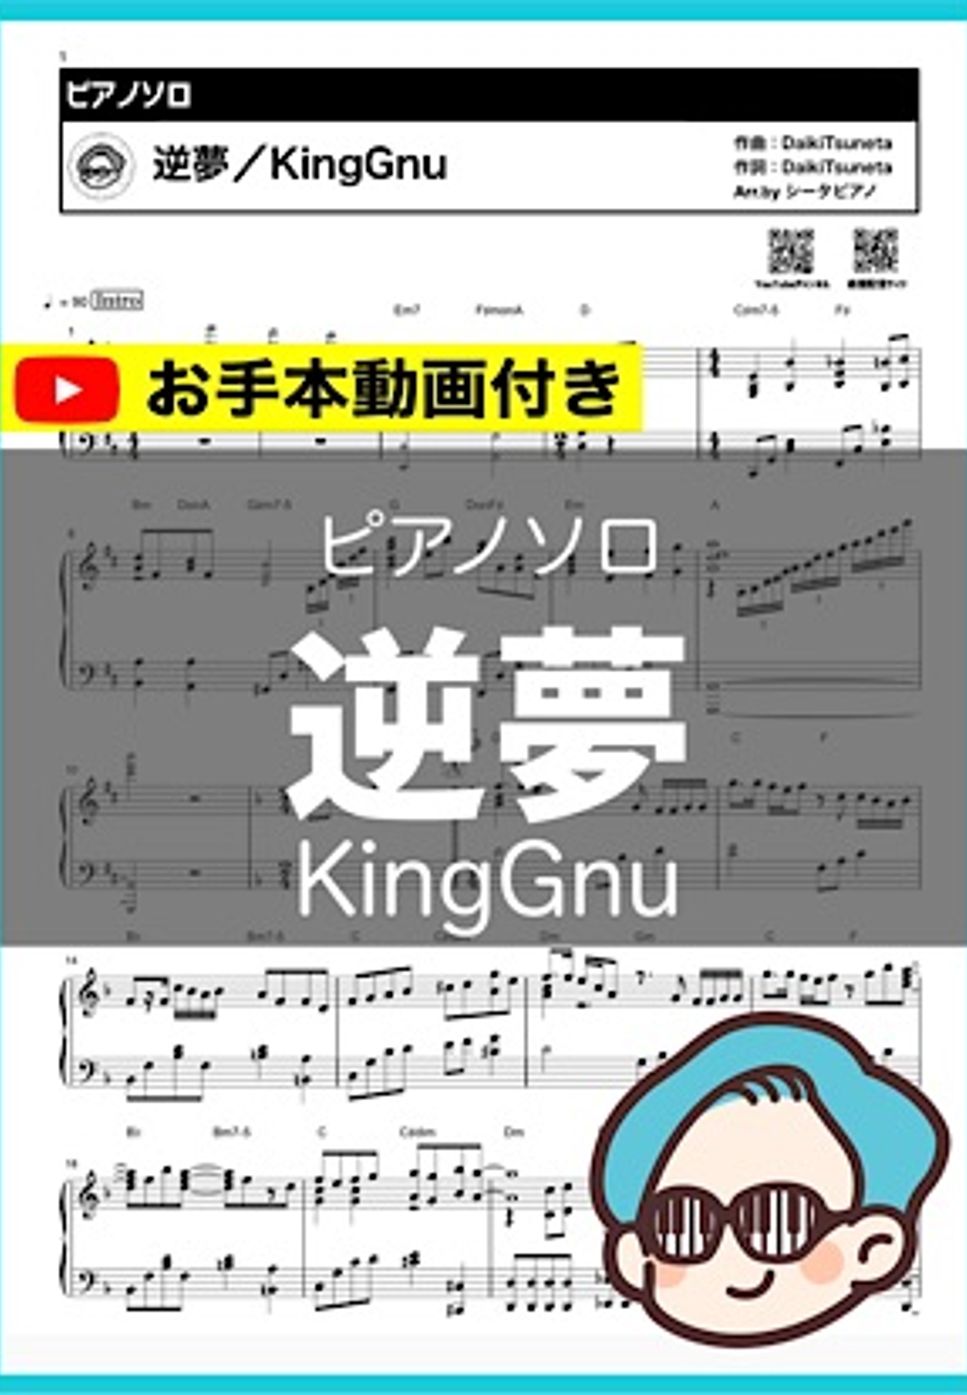 KingGnu - 逆夢 by シータピアノ